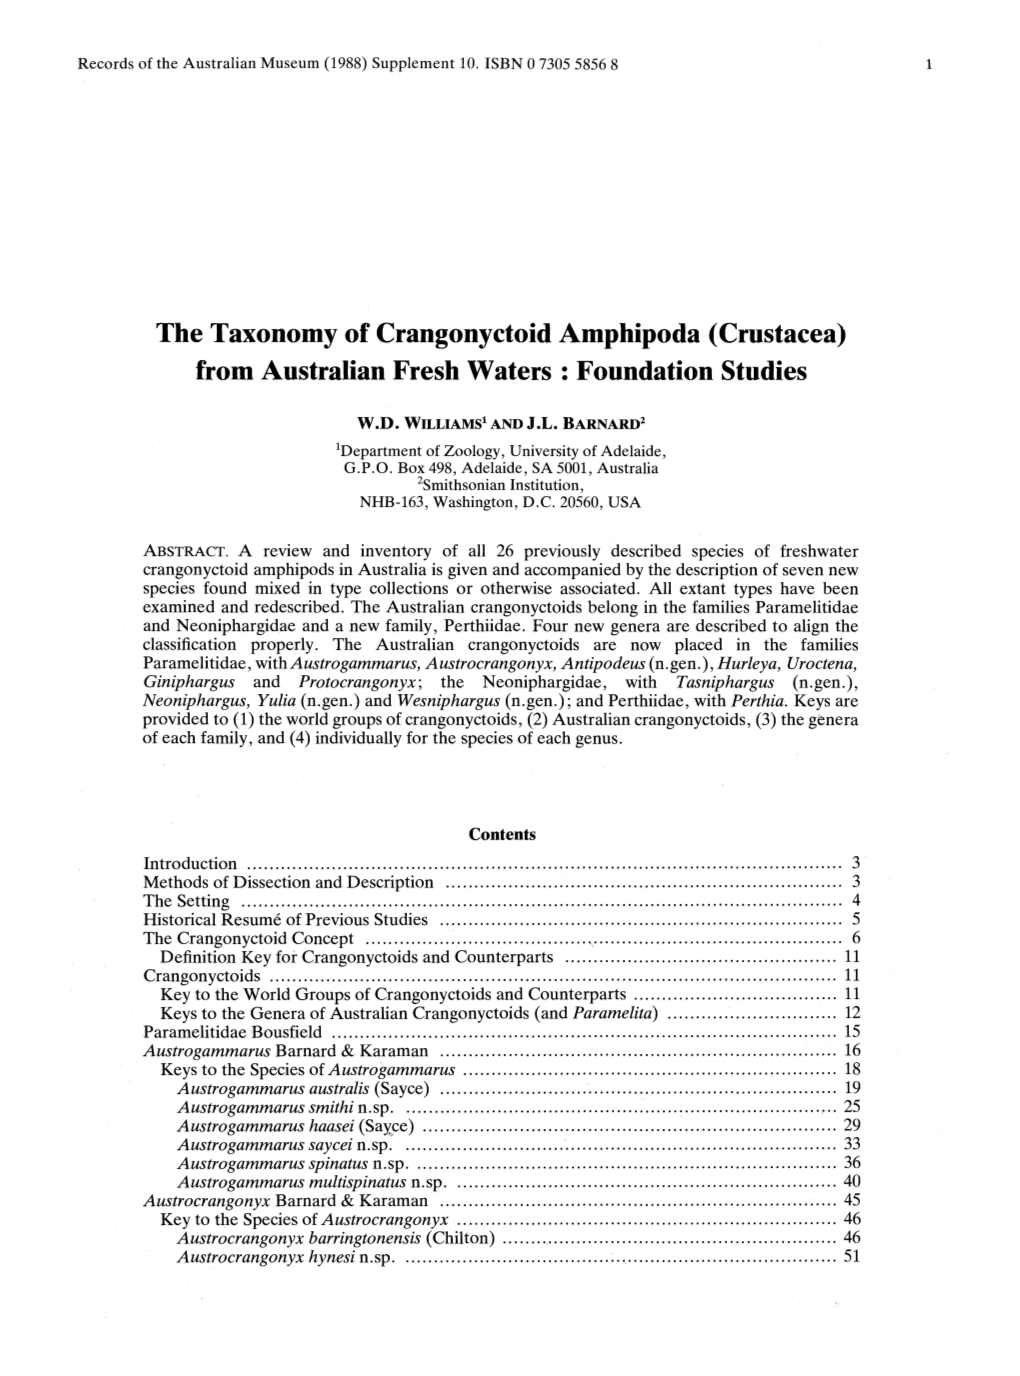 Crustacea) from Australian Fresh Waters : Foundation Studies